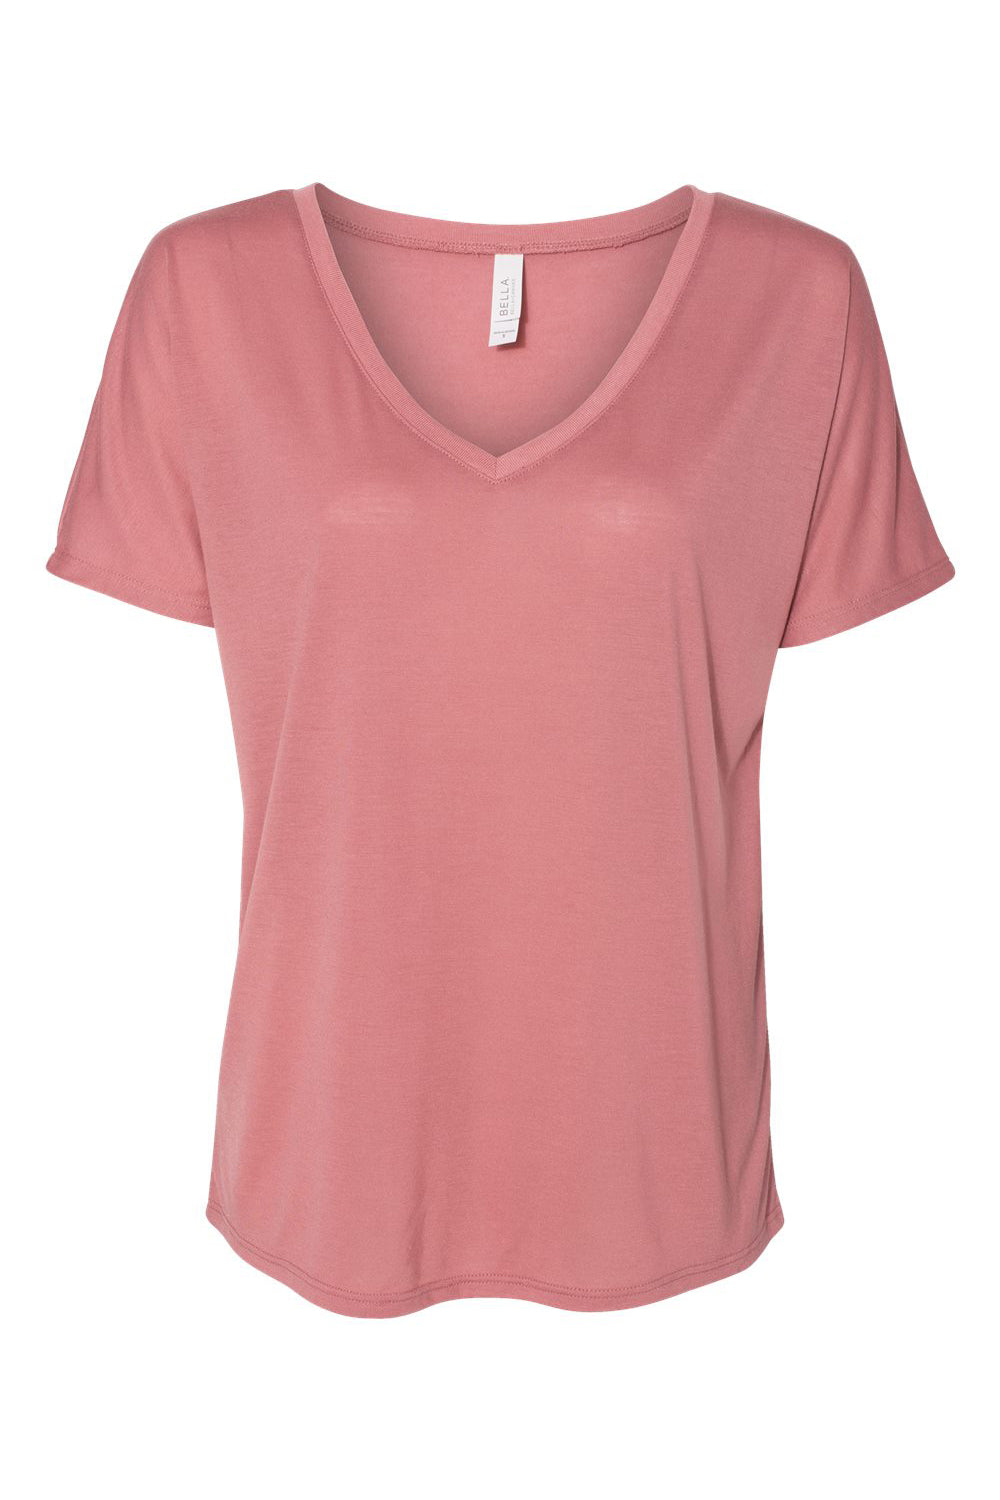 Bella + Canvas 8815 Womens Slouchy Short Sleeve V-Neck T-Shirt Mauve Flat Front